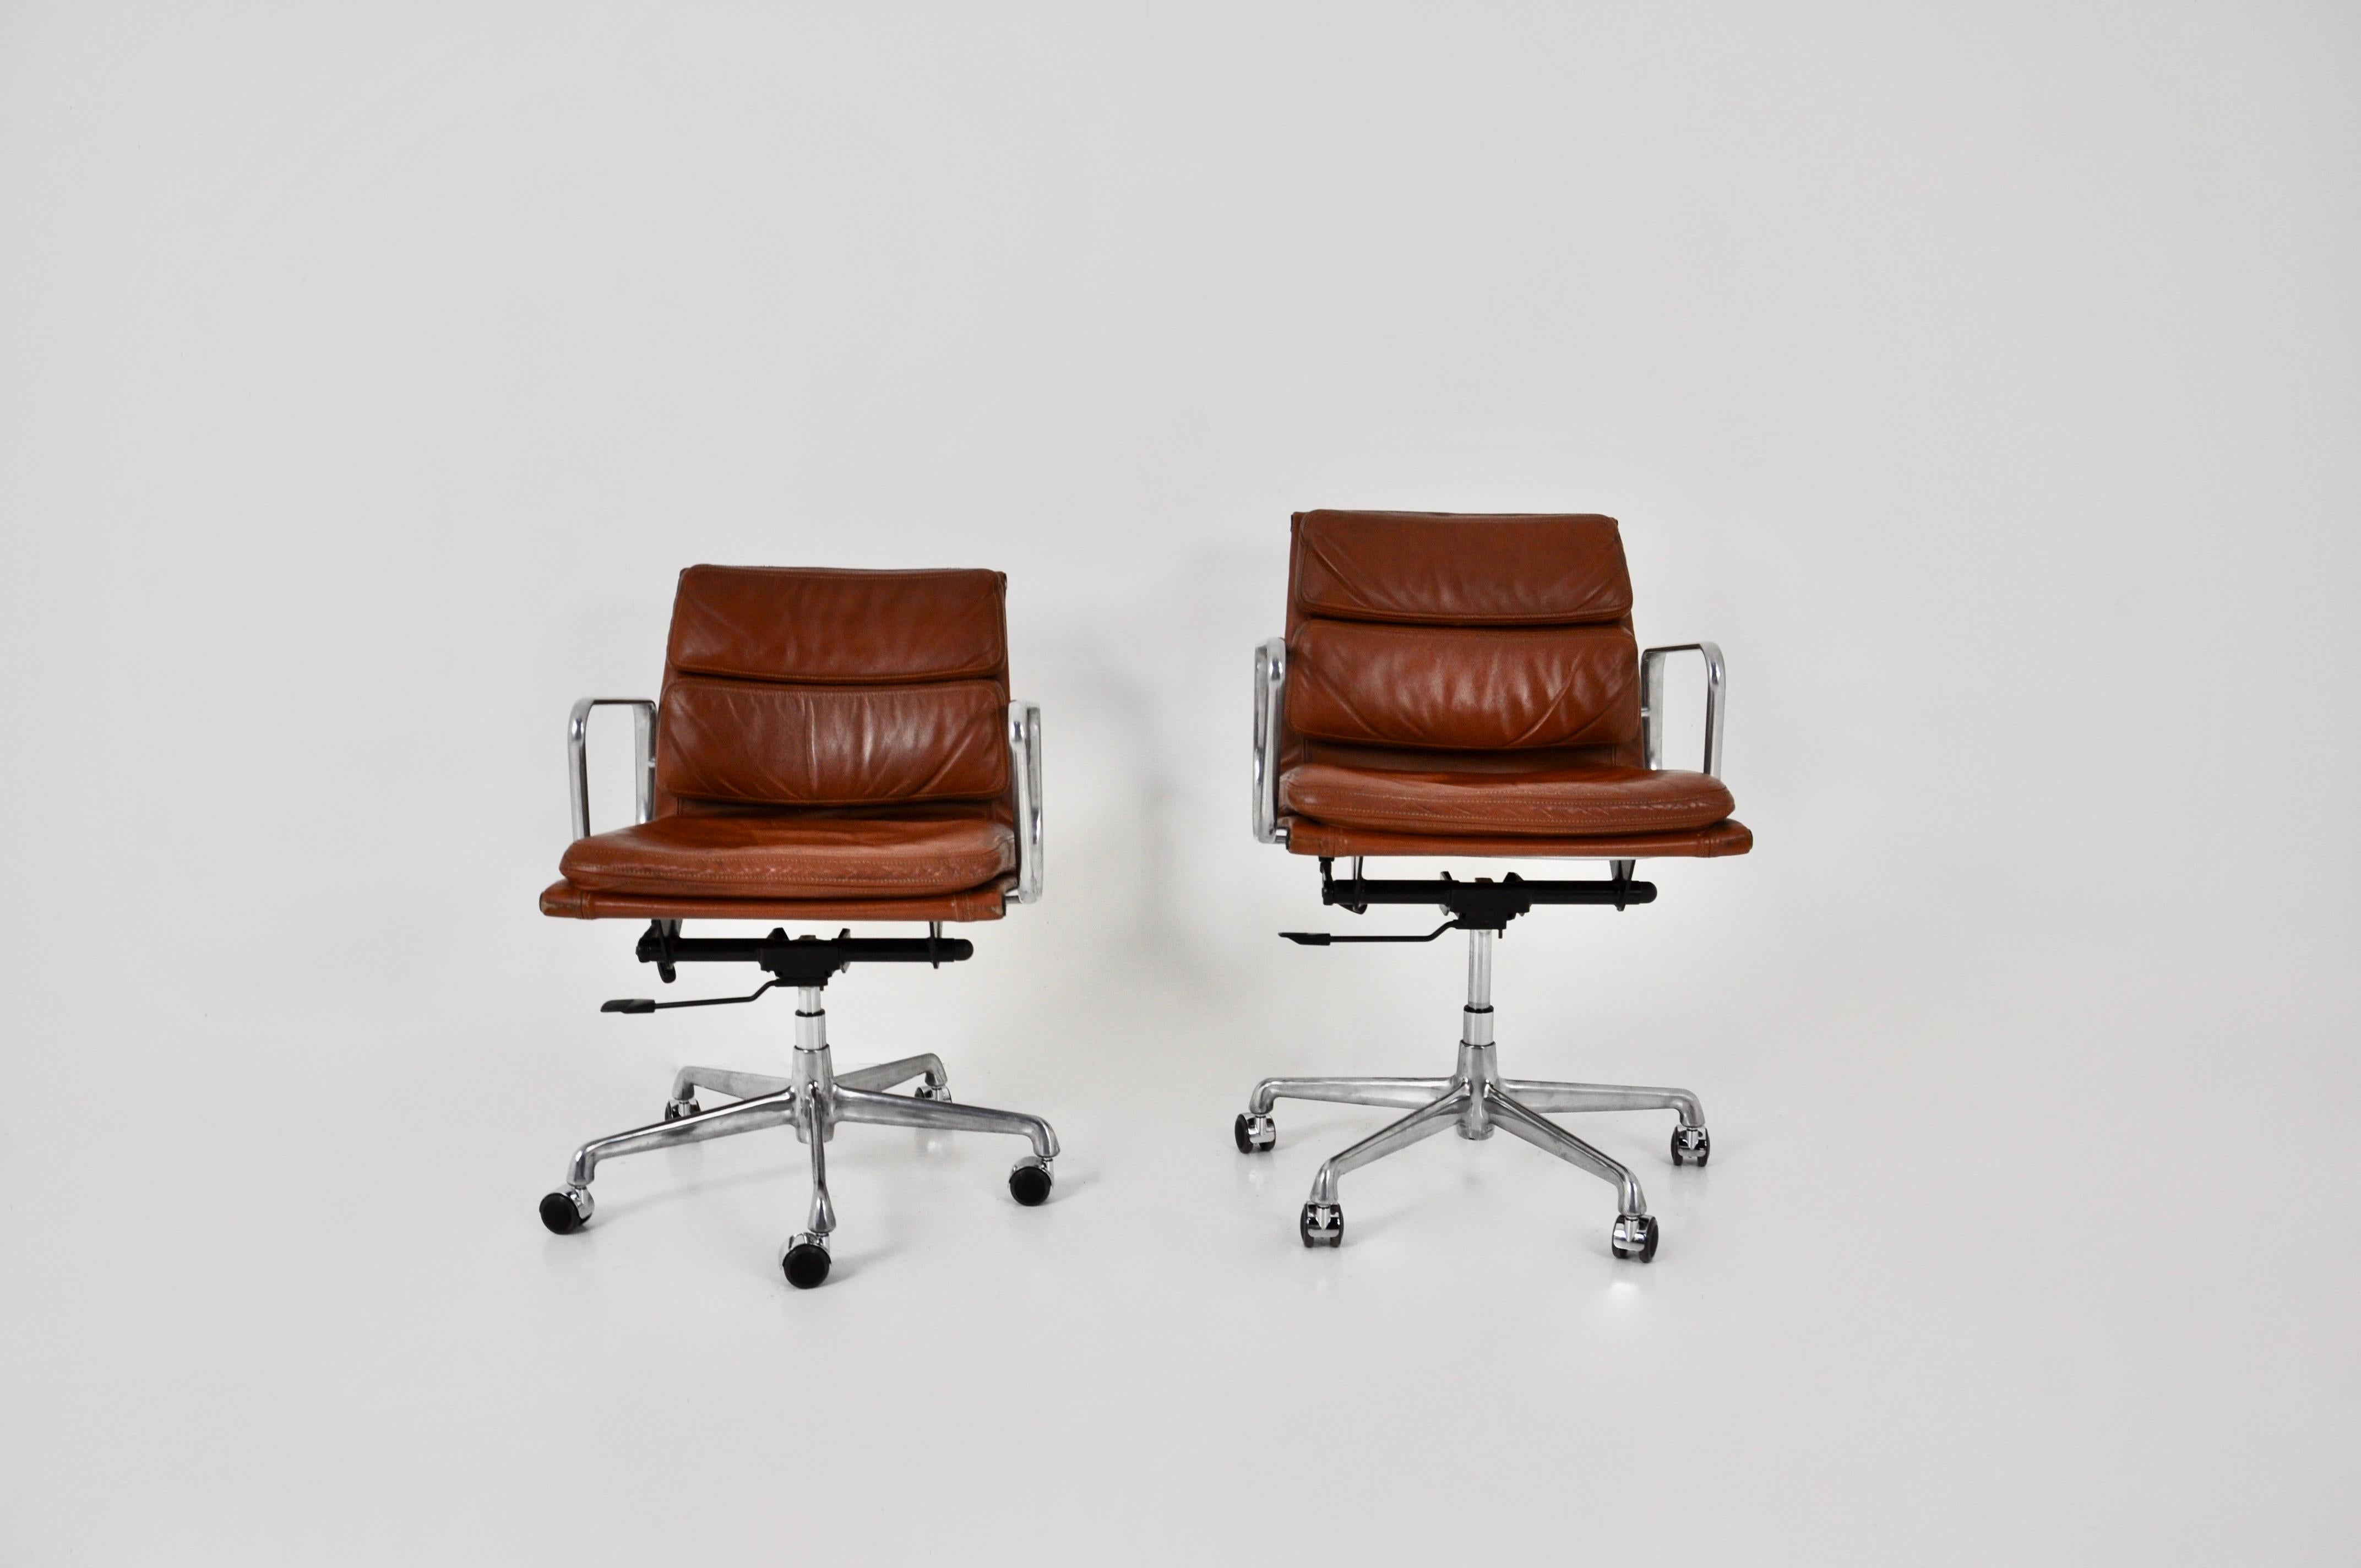 EA 217 cognac Soft Pad Chair von Charles & Ray Eames für ICF, 1970er Jahre, 2 Stück (Metall)